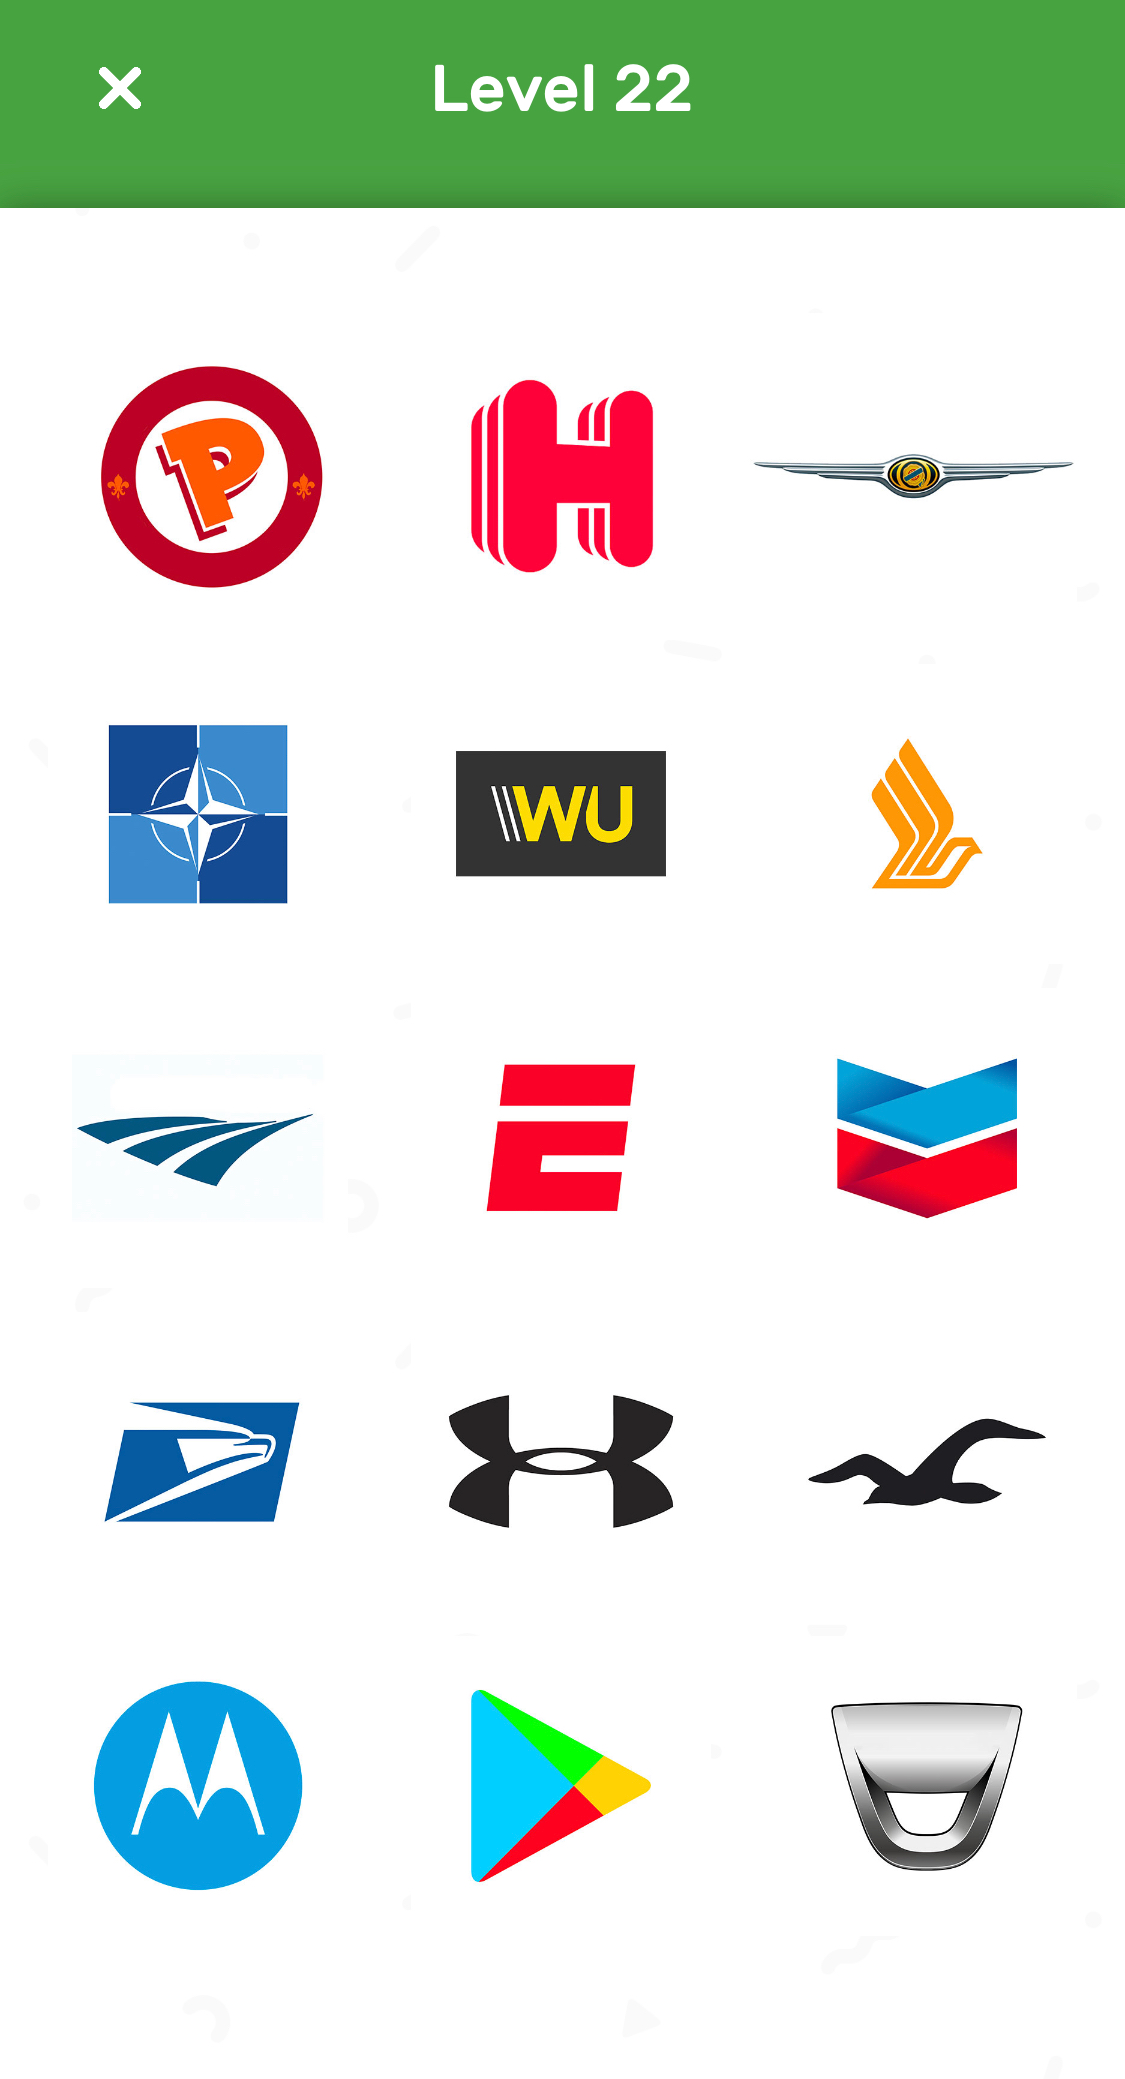 Share more than 128 logo cheats super hot